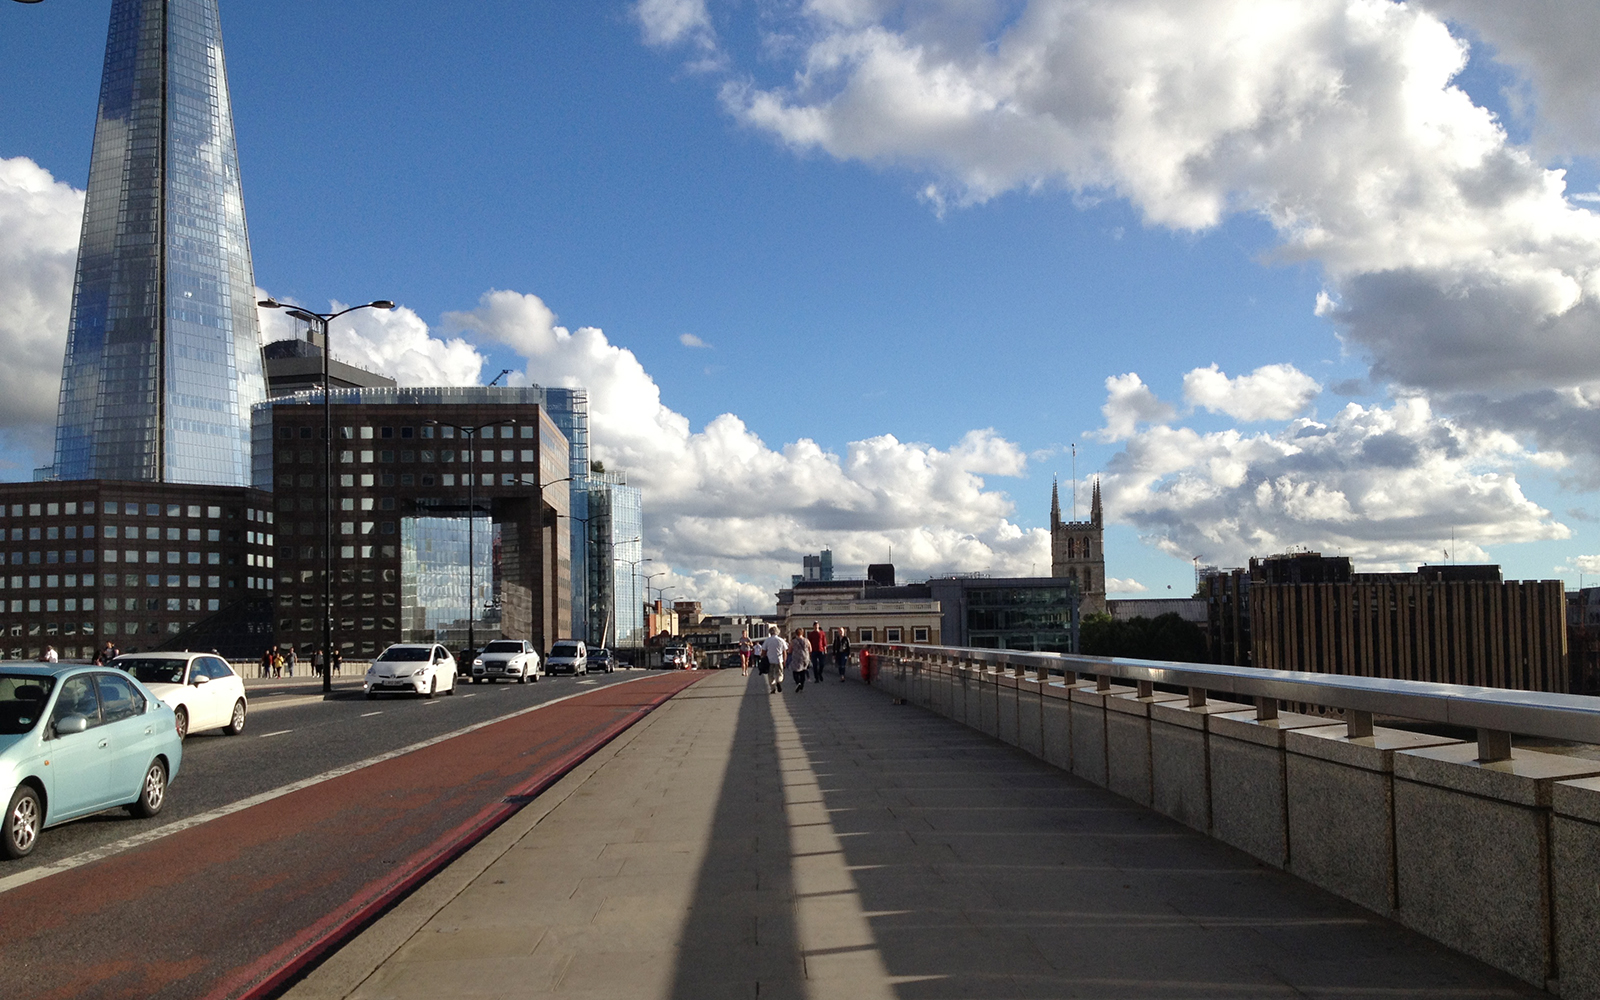 London Bridge 23 August 2015 4